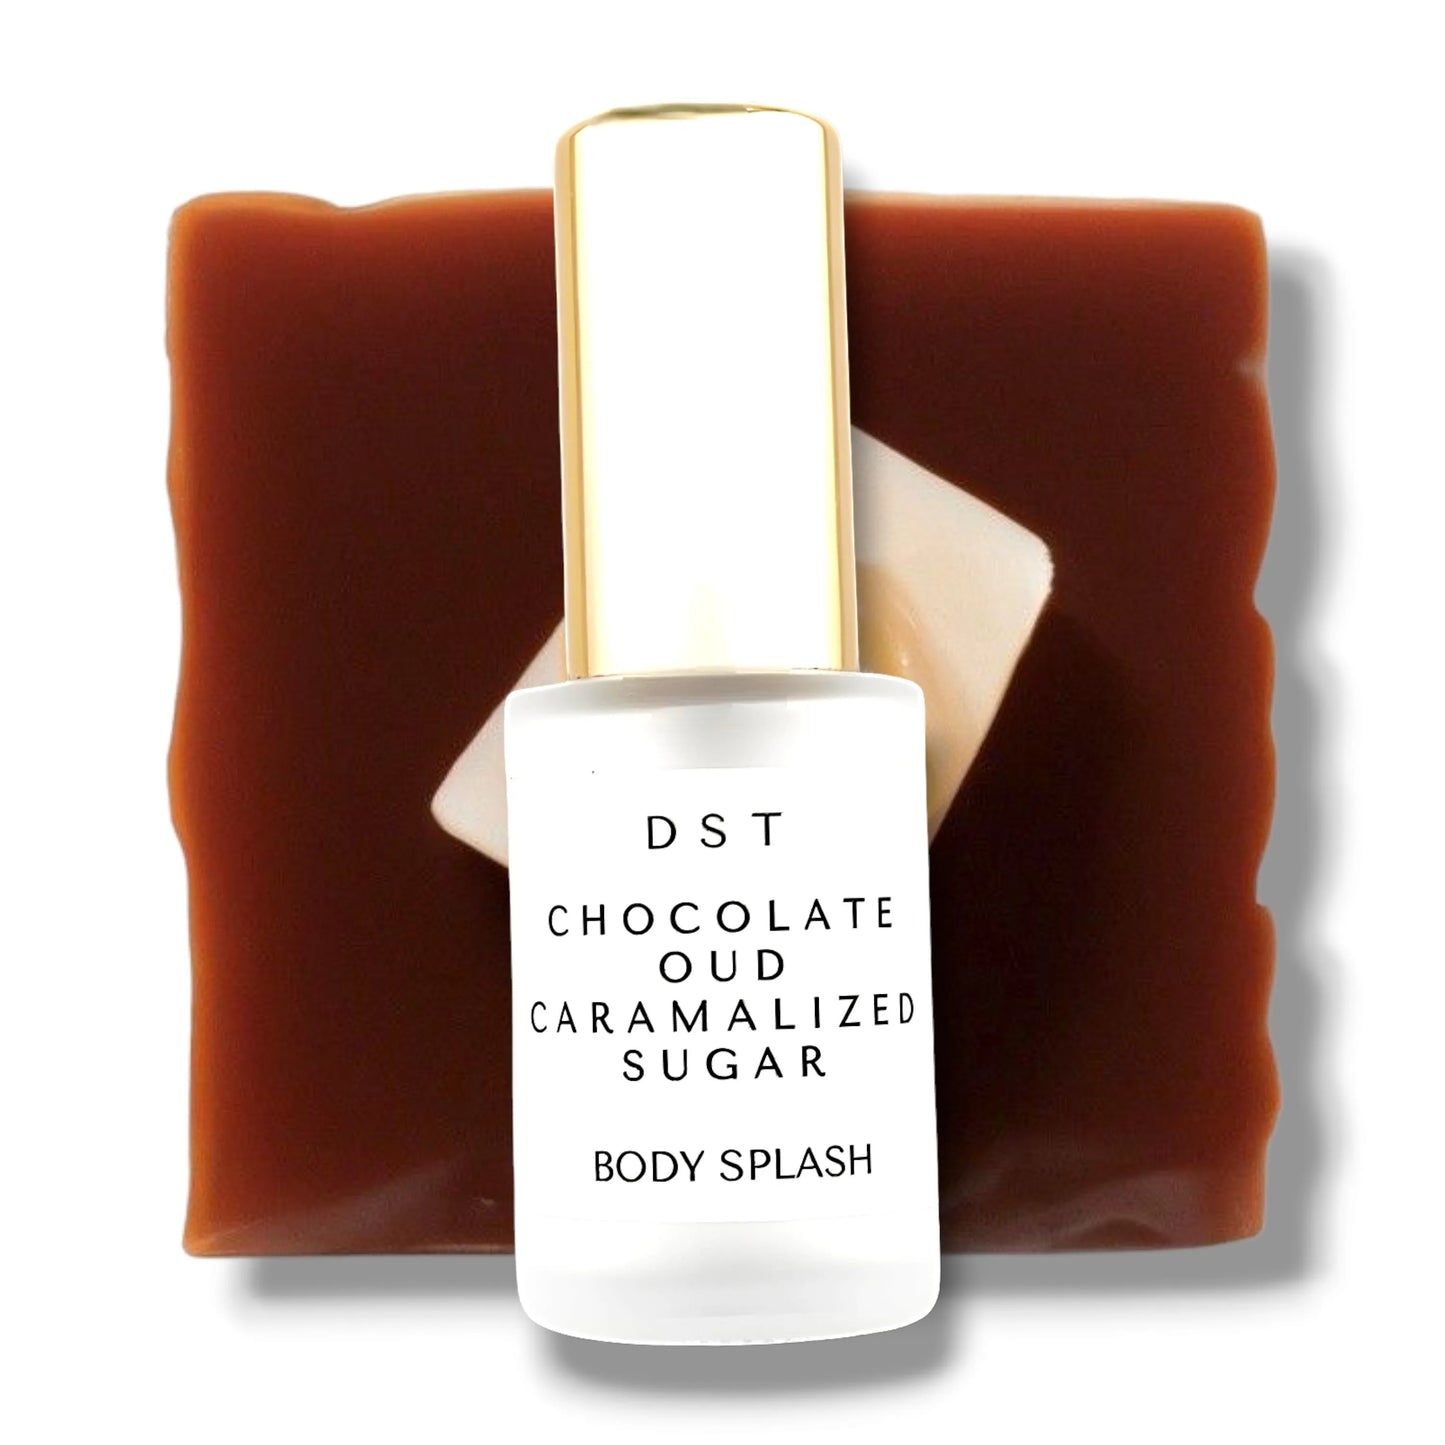 Chocolate Oud & Caramelized Sugar Body Splash